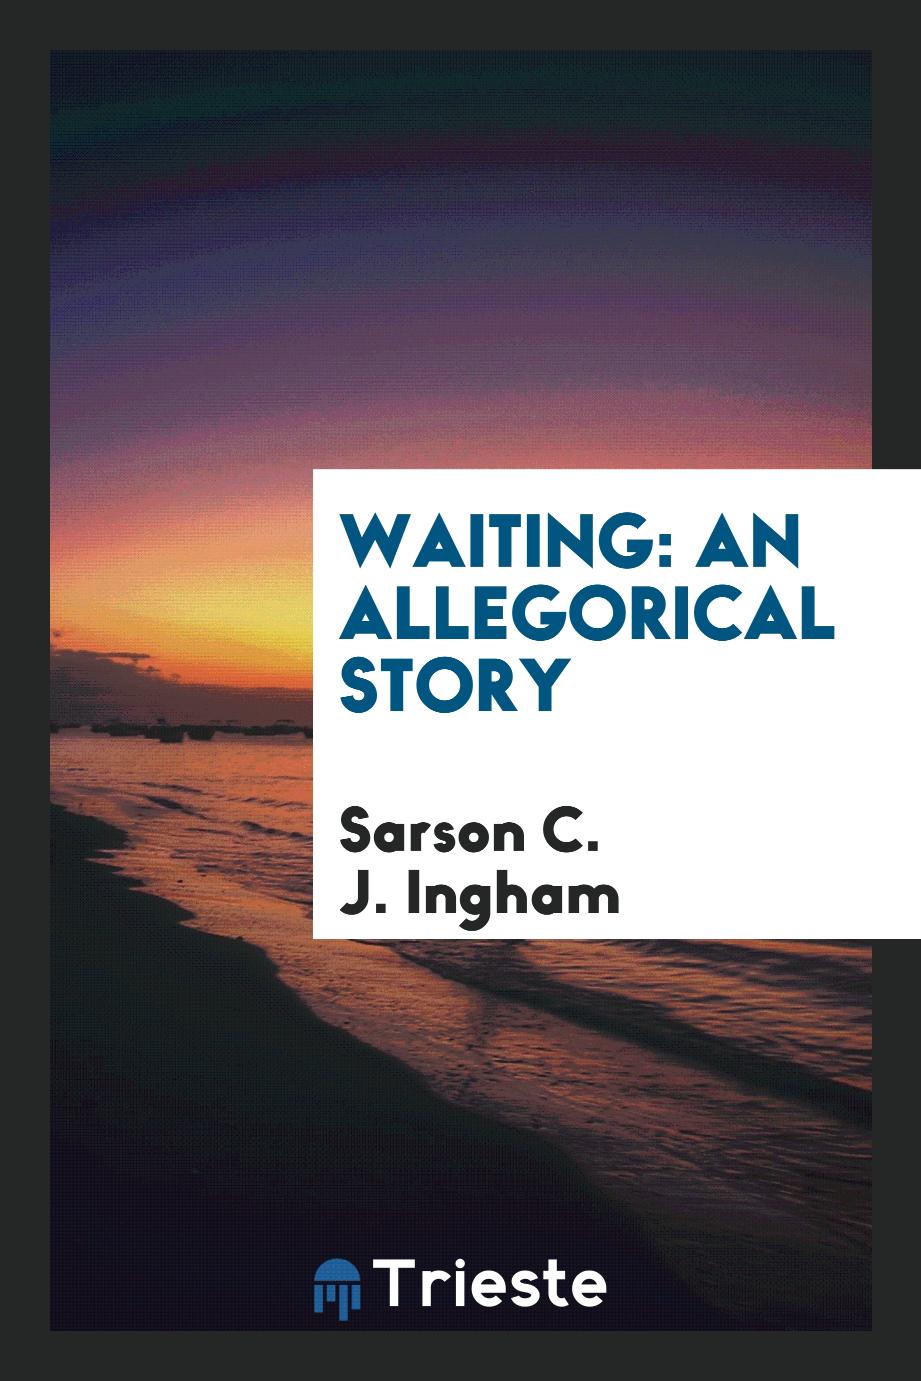 Waiting: an allegorical story